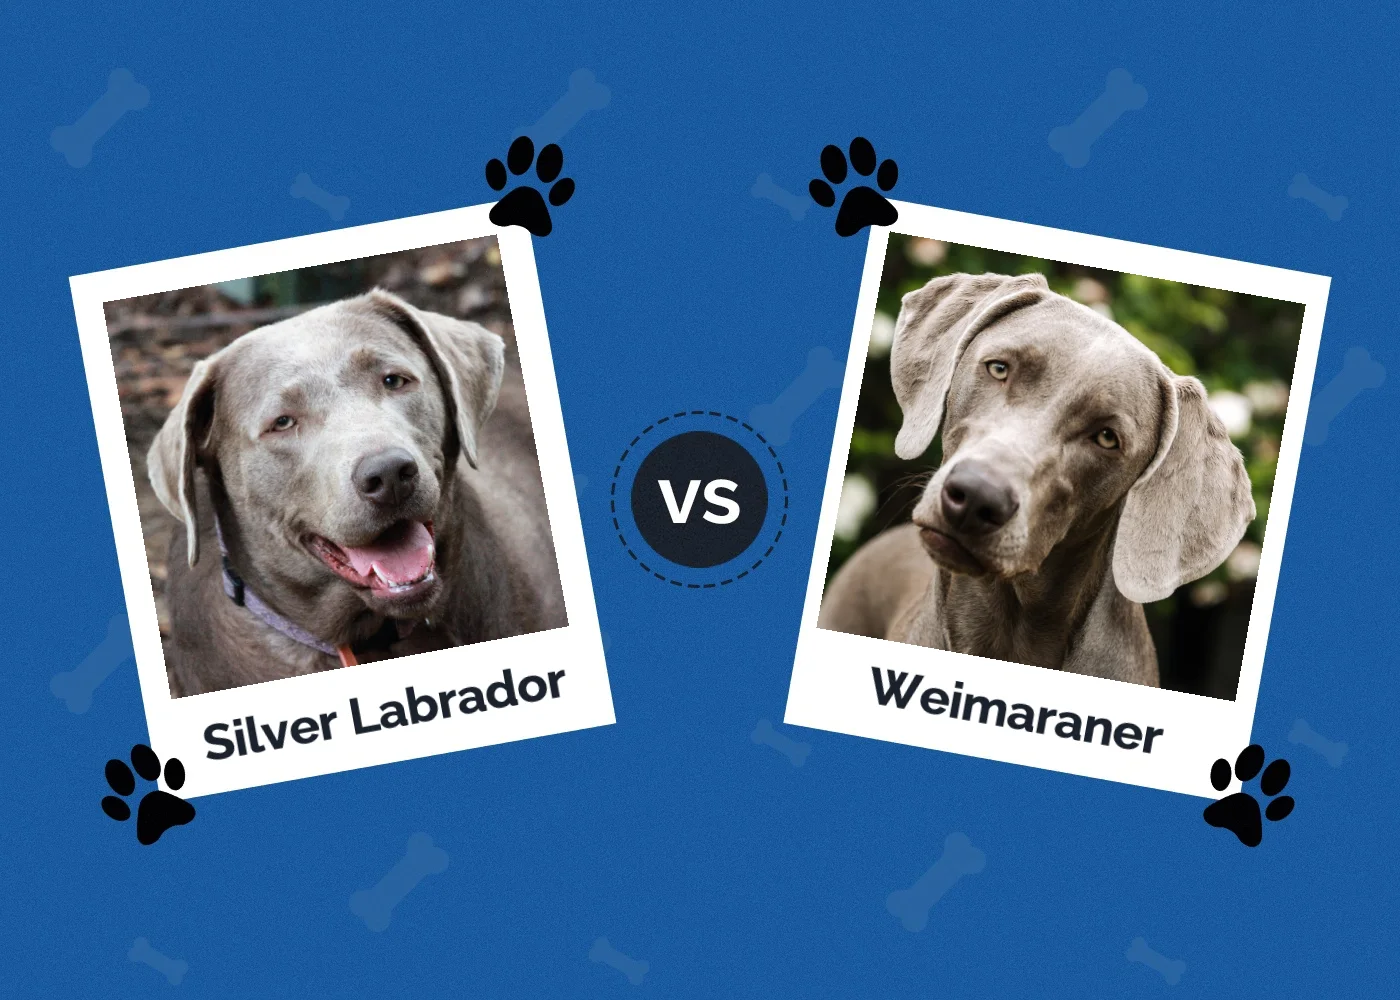 Silver Labrador vs Weimaraner - Featured Image